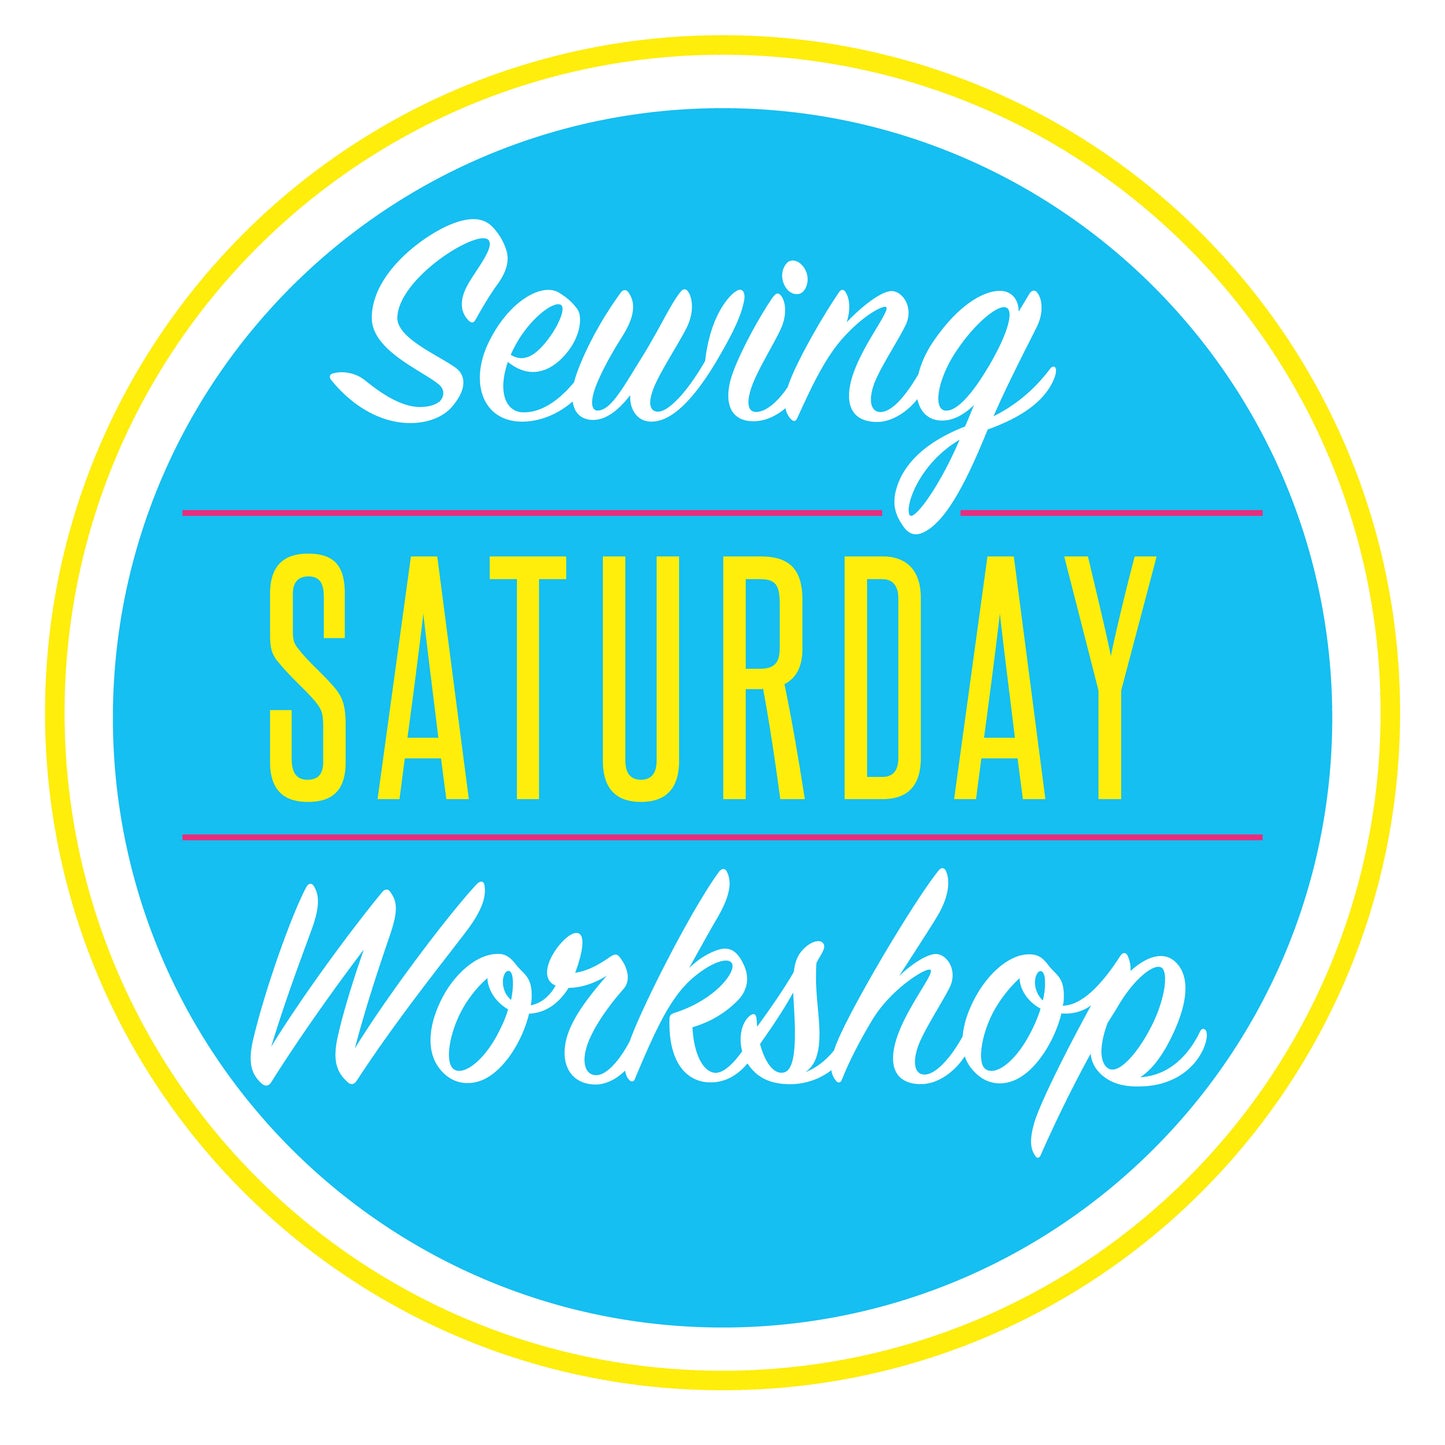 Sewing Workshop: Saturday, July 6, 9am-3pm